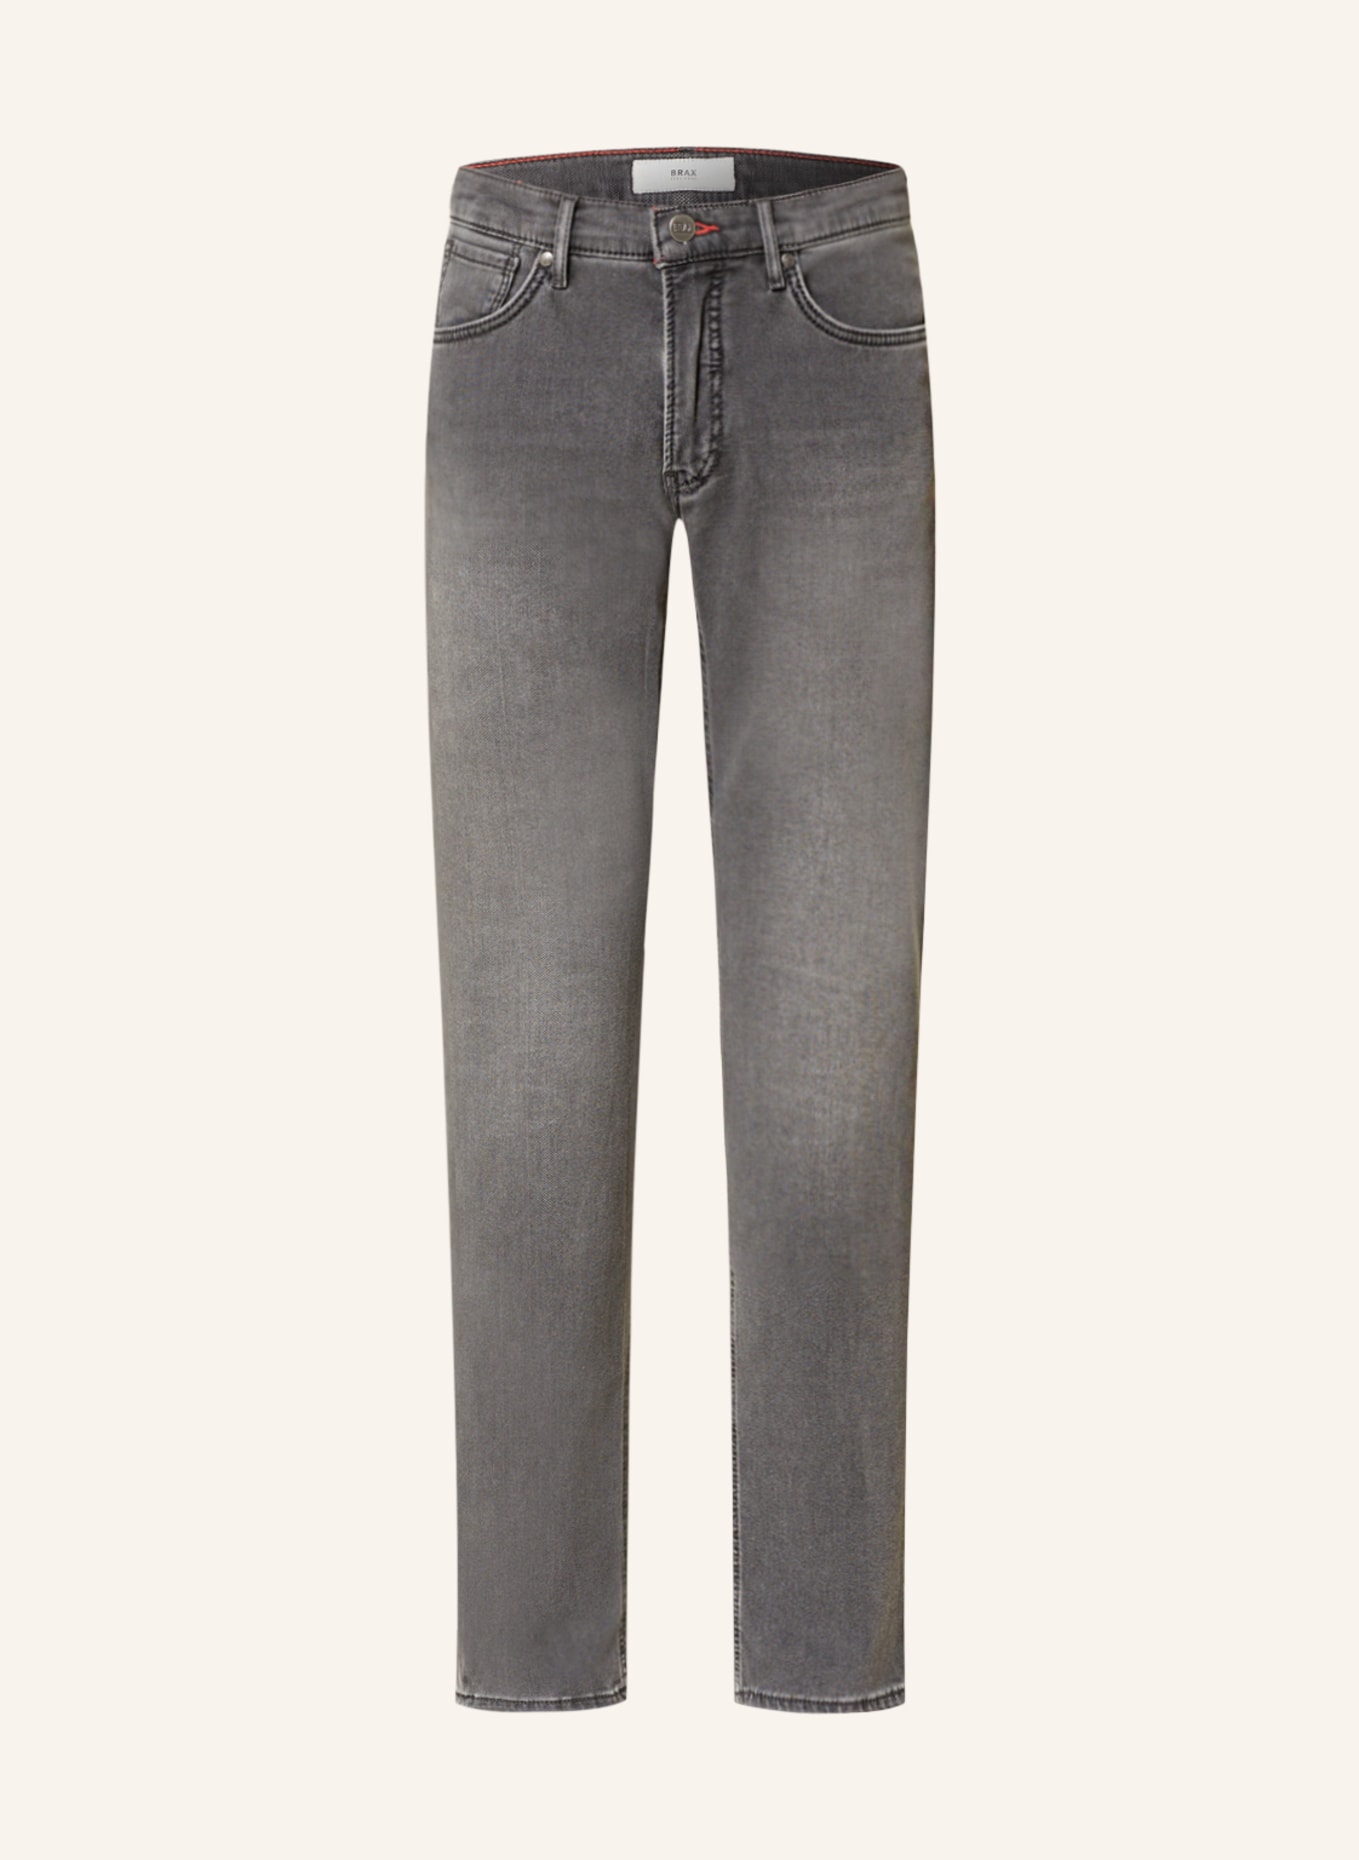 BRAX grey in Jeans slate CHUCK used Fit Modern 05